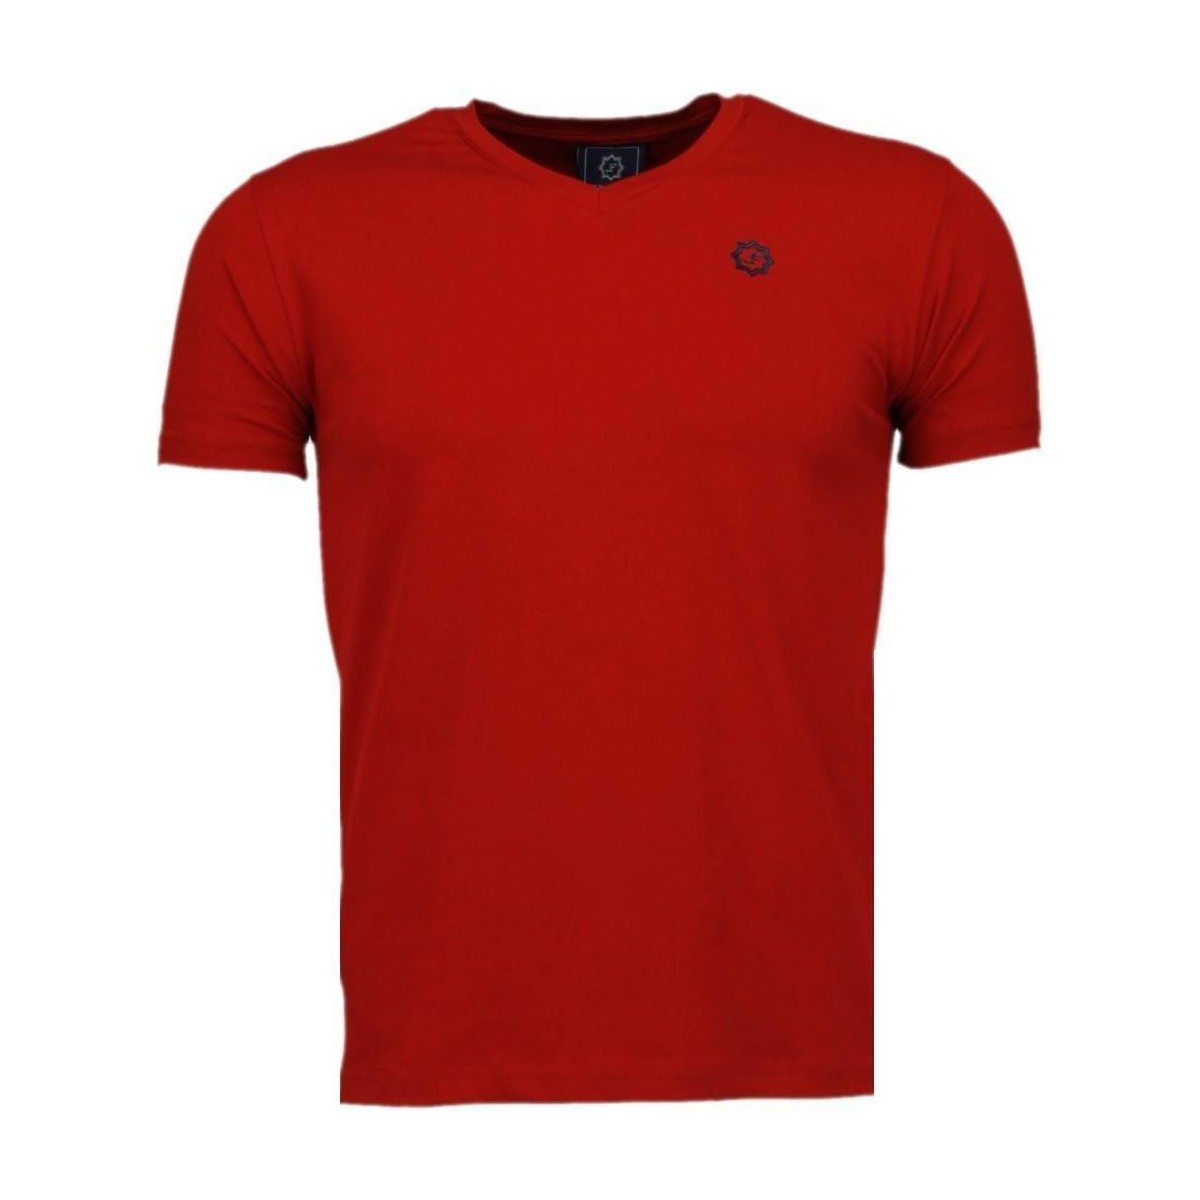 Kleidung Herren T-Shirts Local Fanatic  Rot